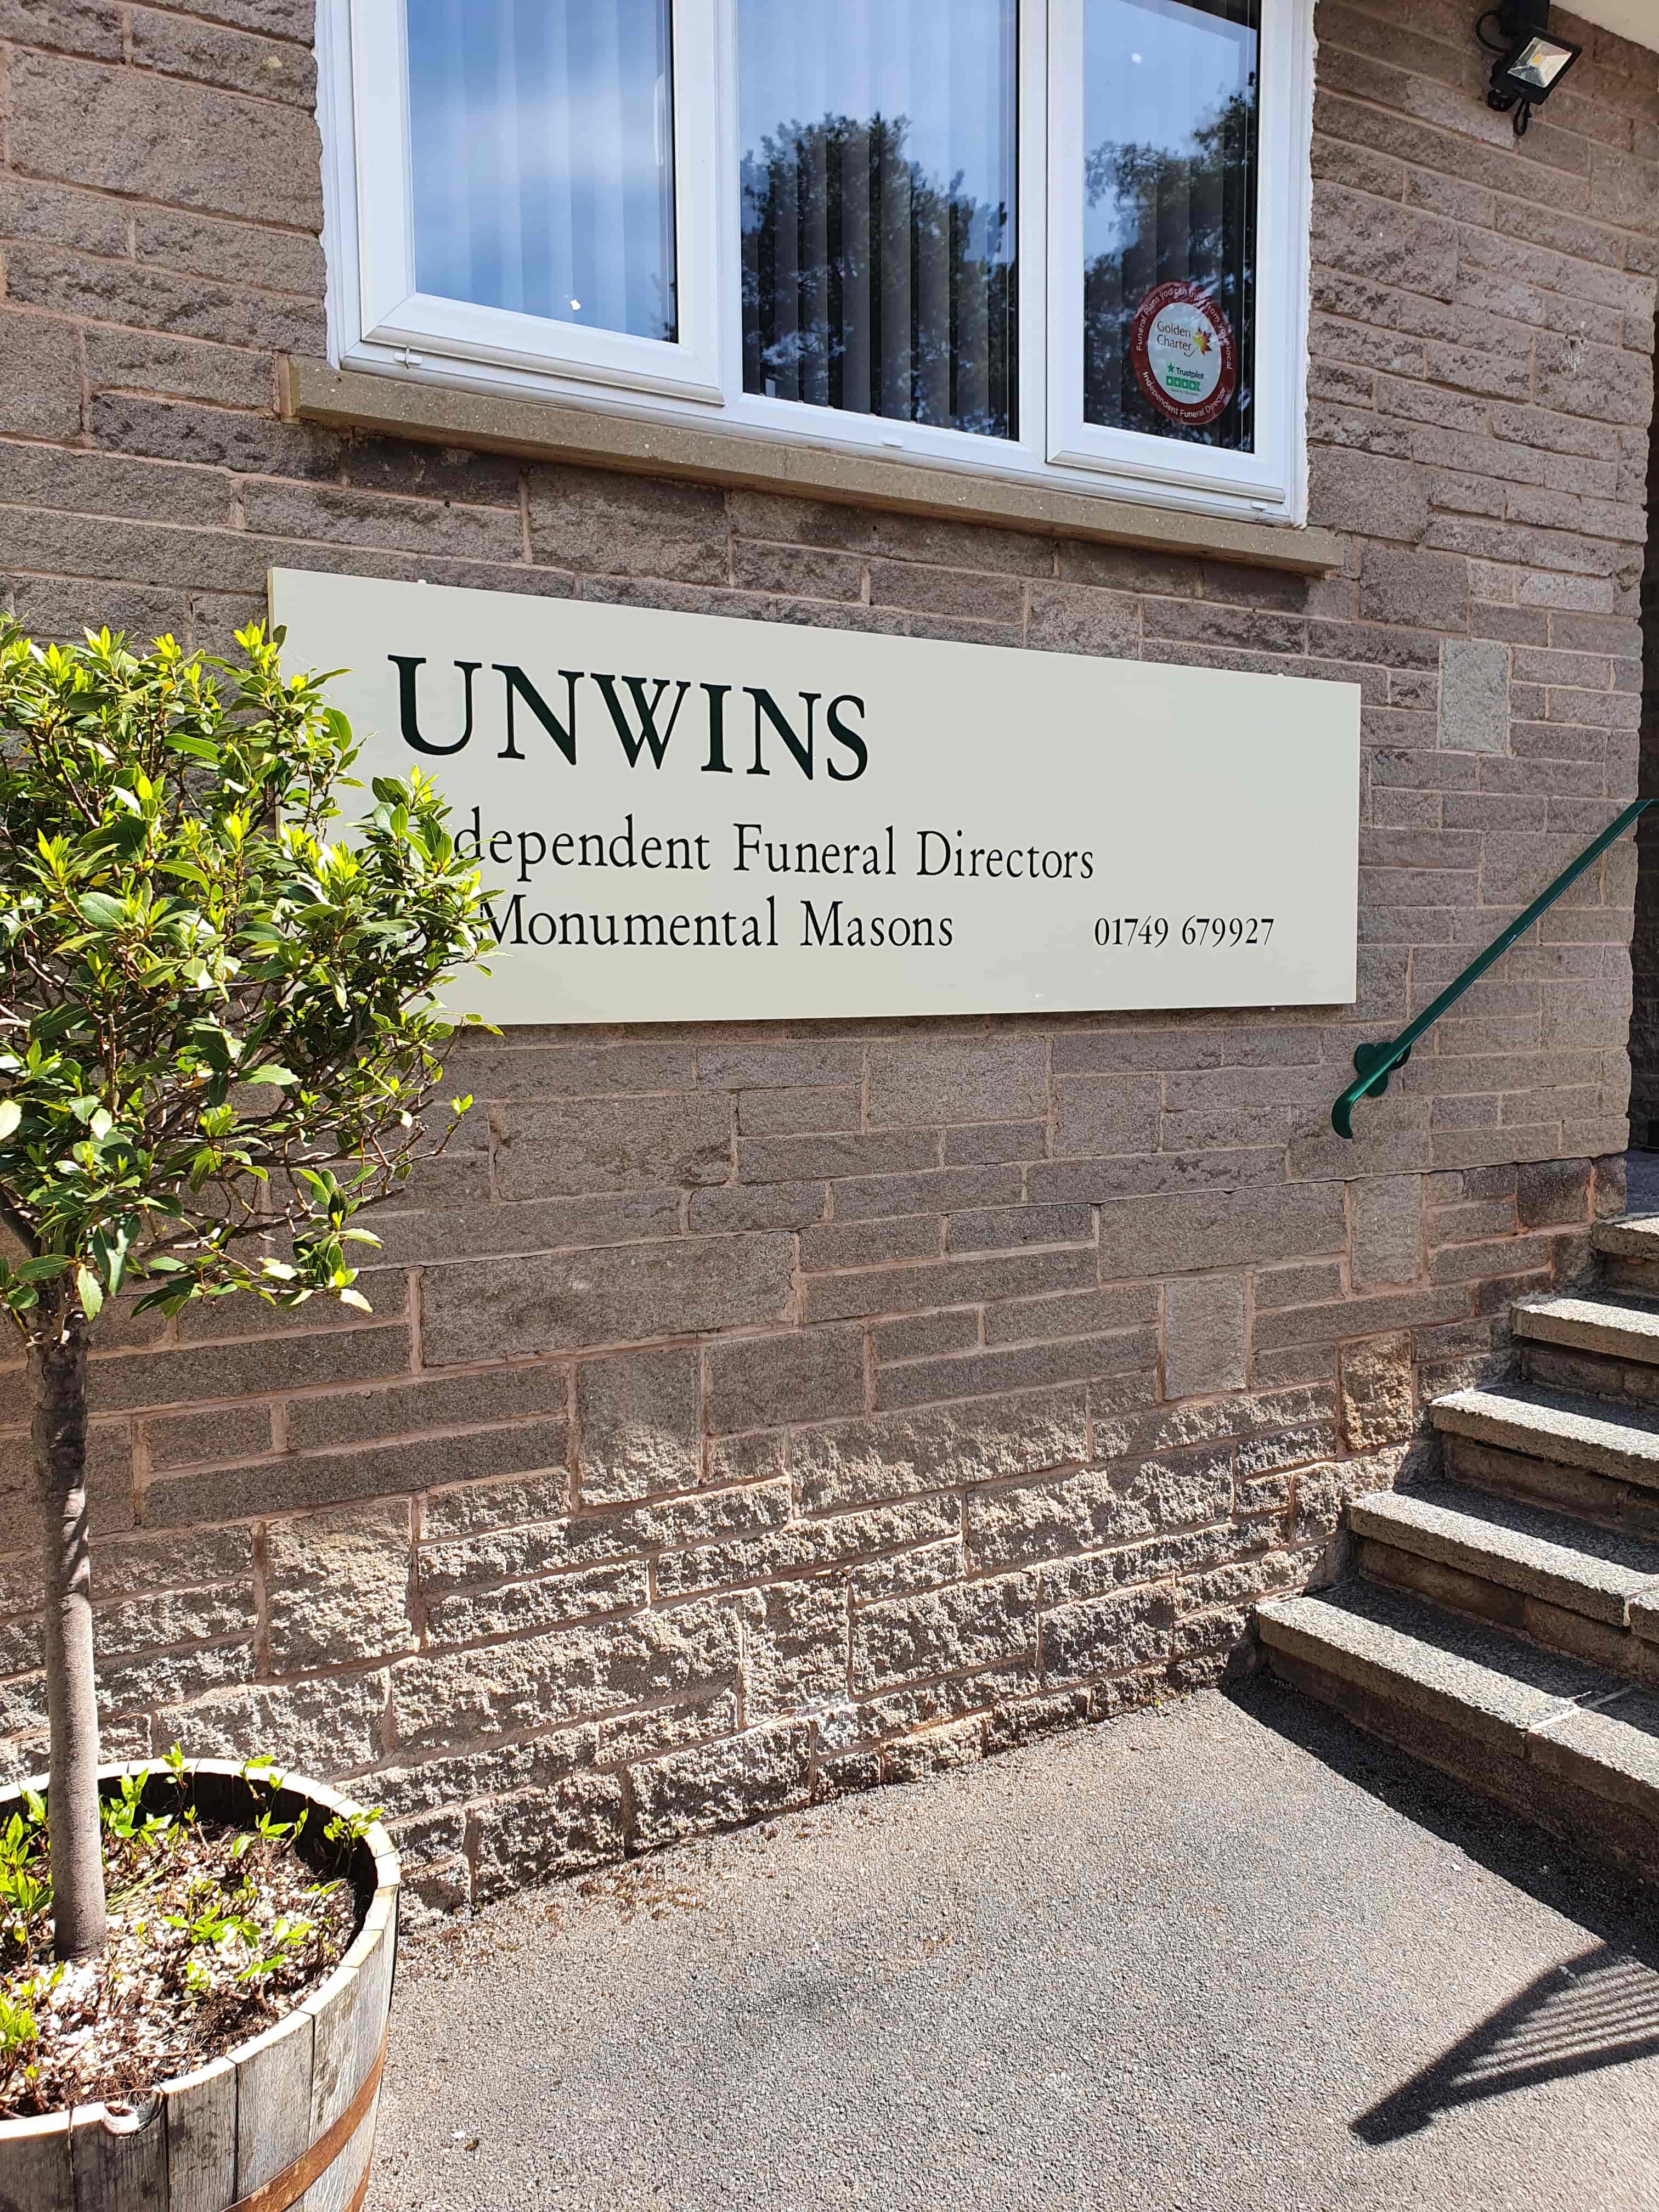 Unwins sign on building